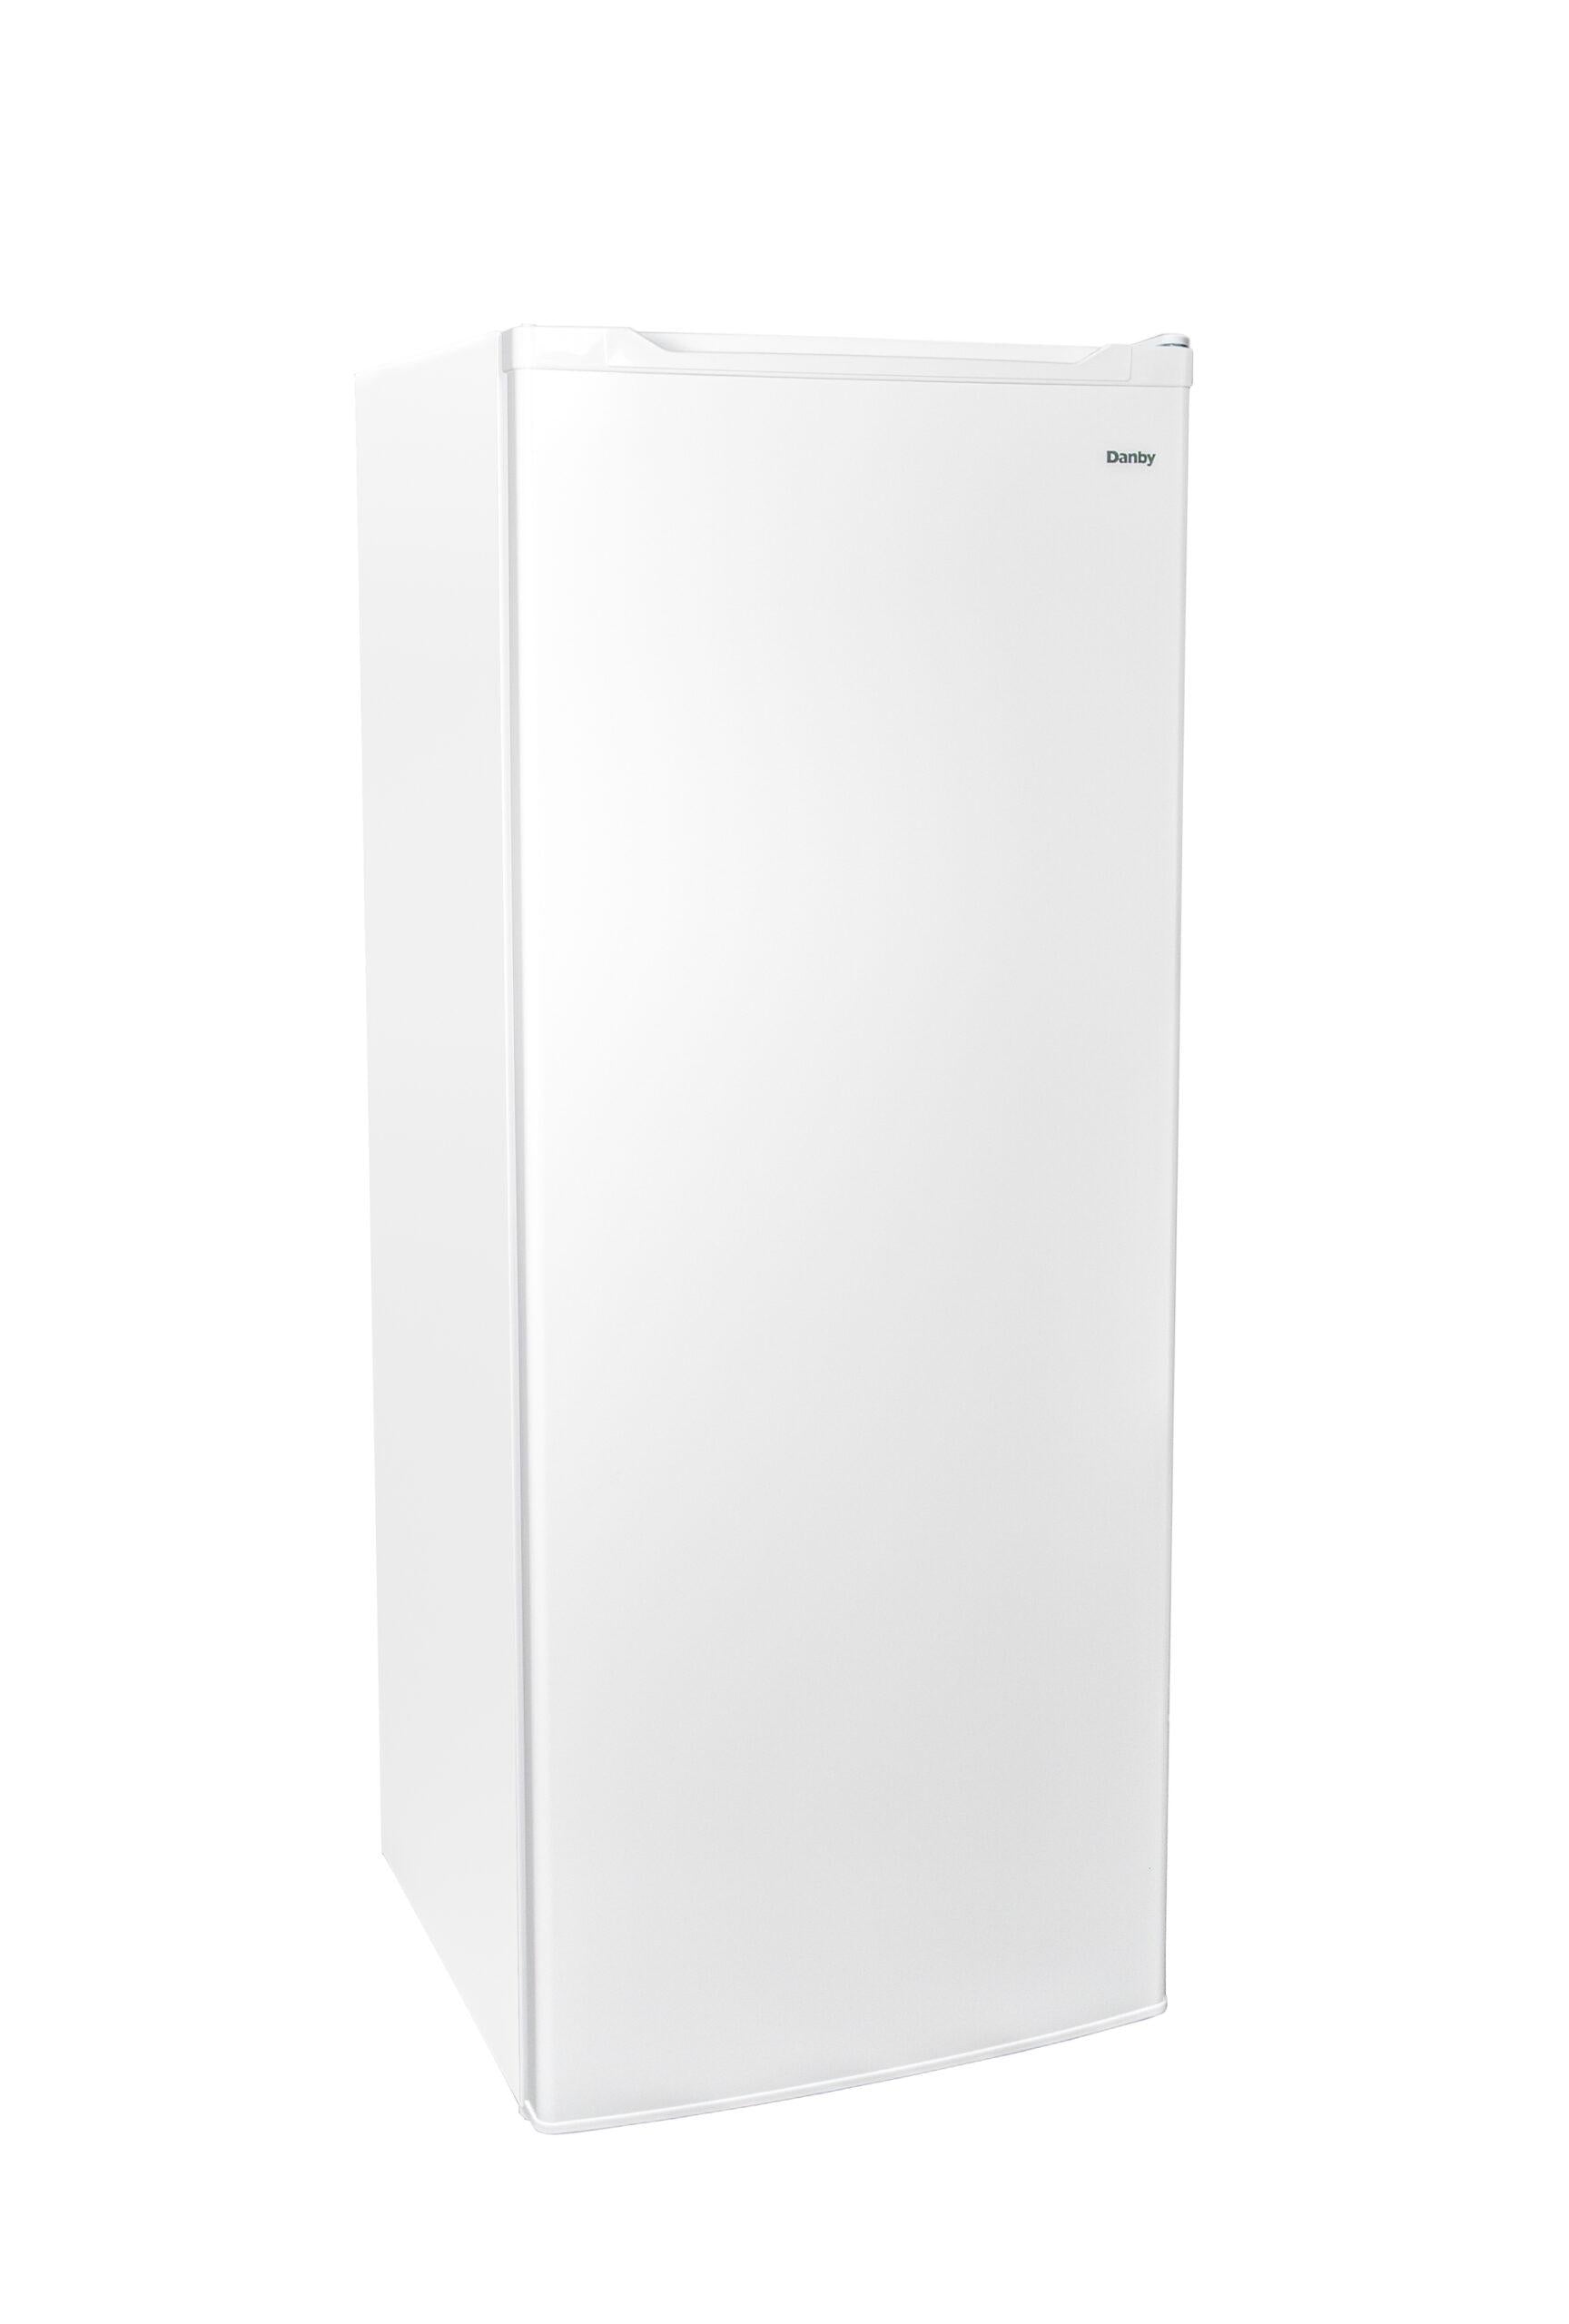 Danby DUFM060B2WDB Danby 6.0 Cu. Ft. Upright Freezer In White